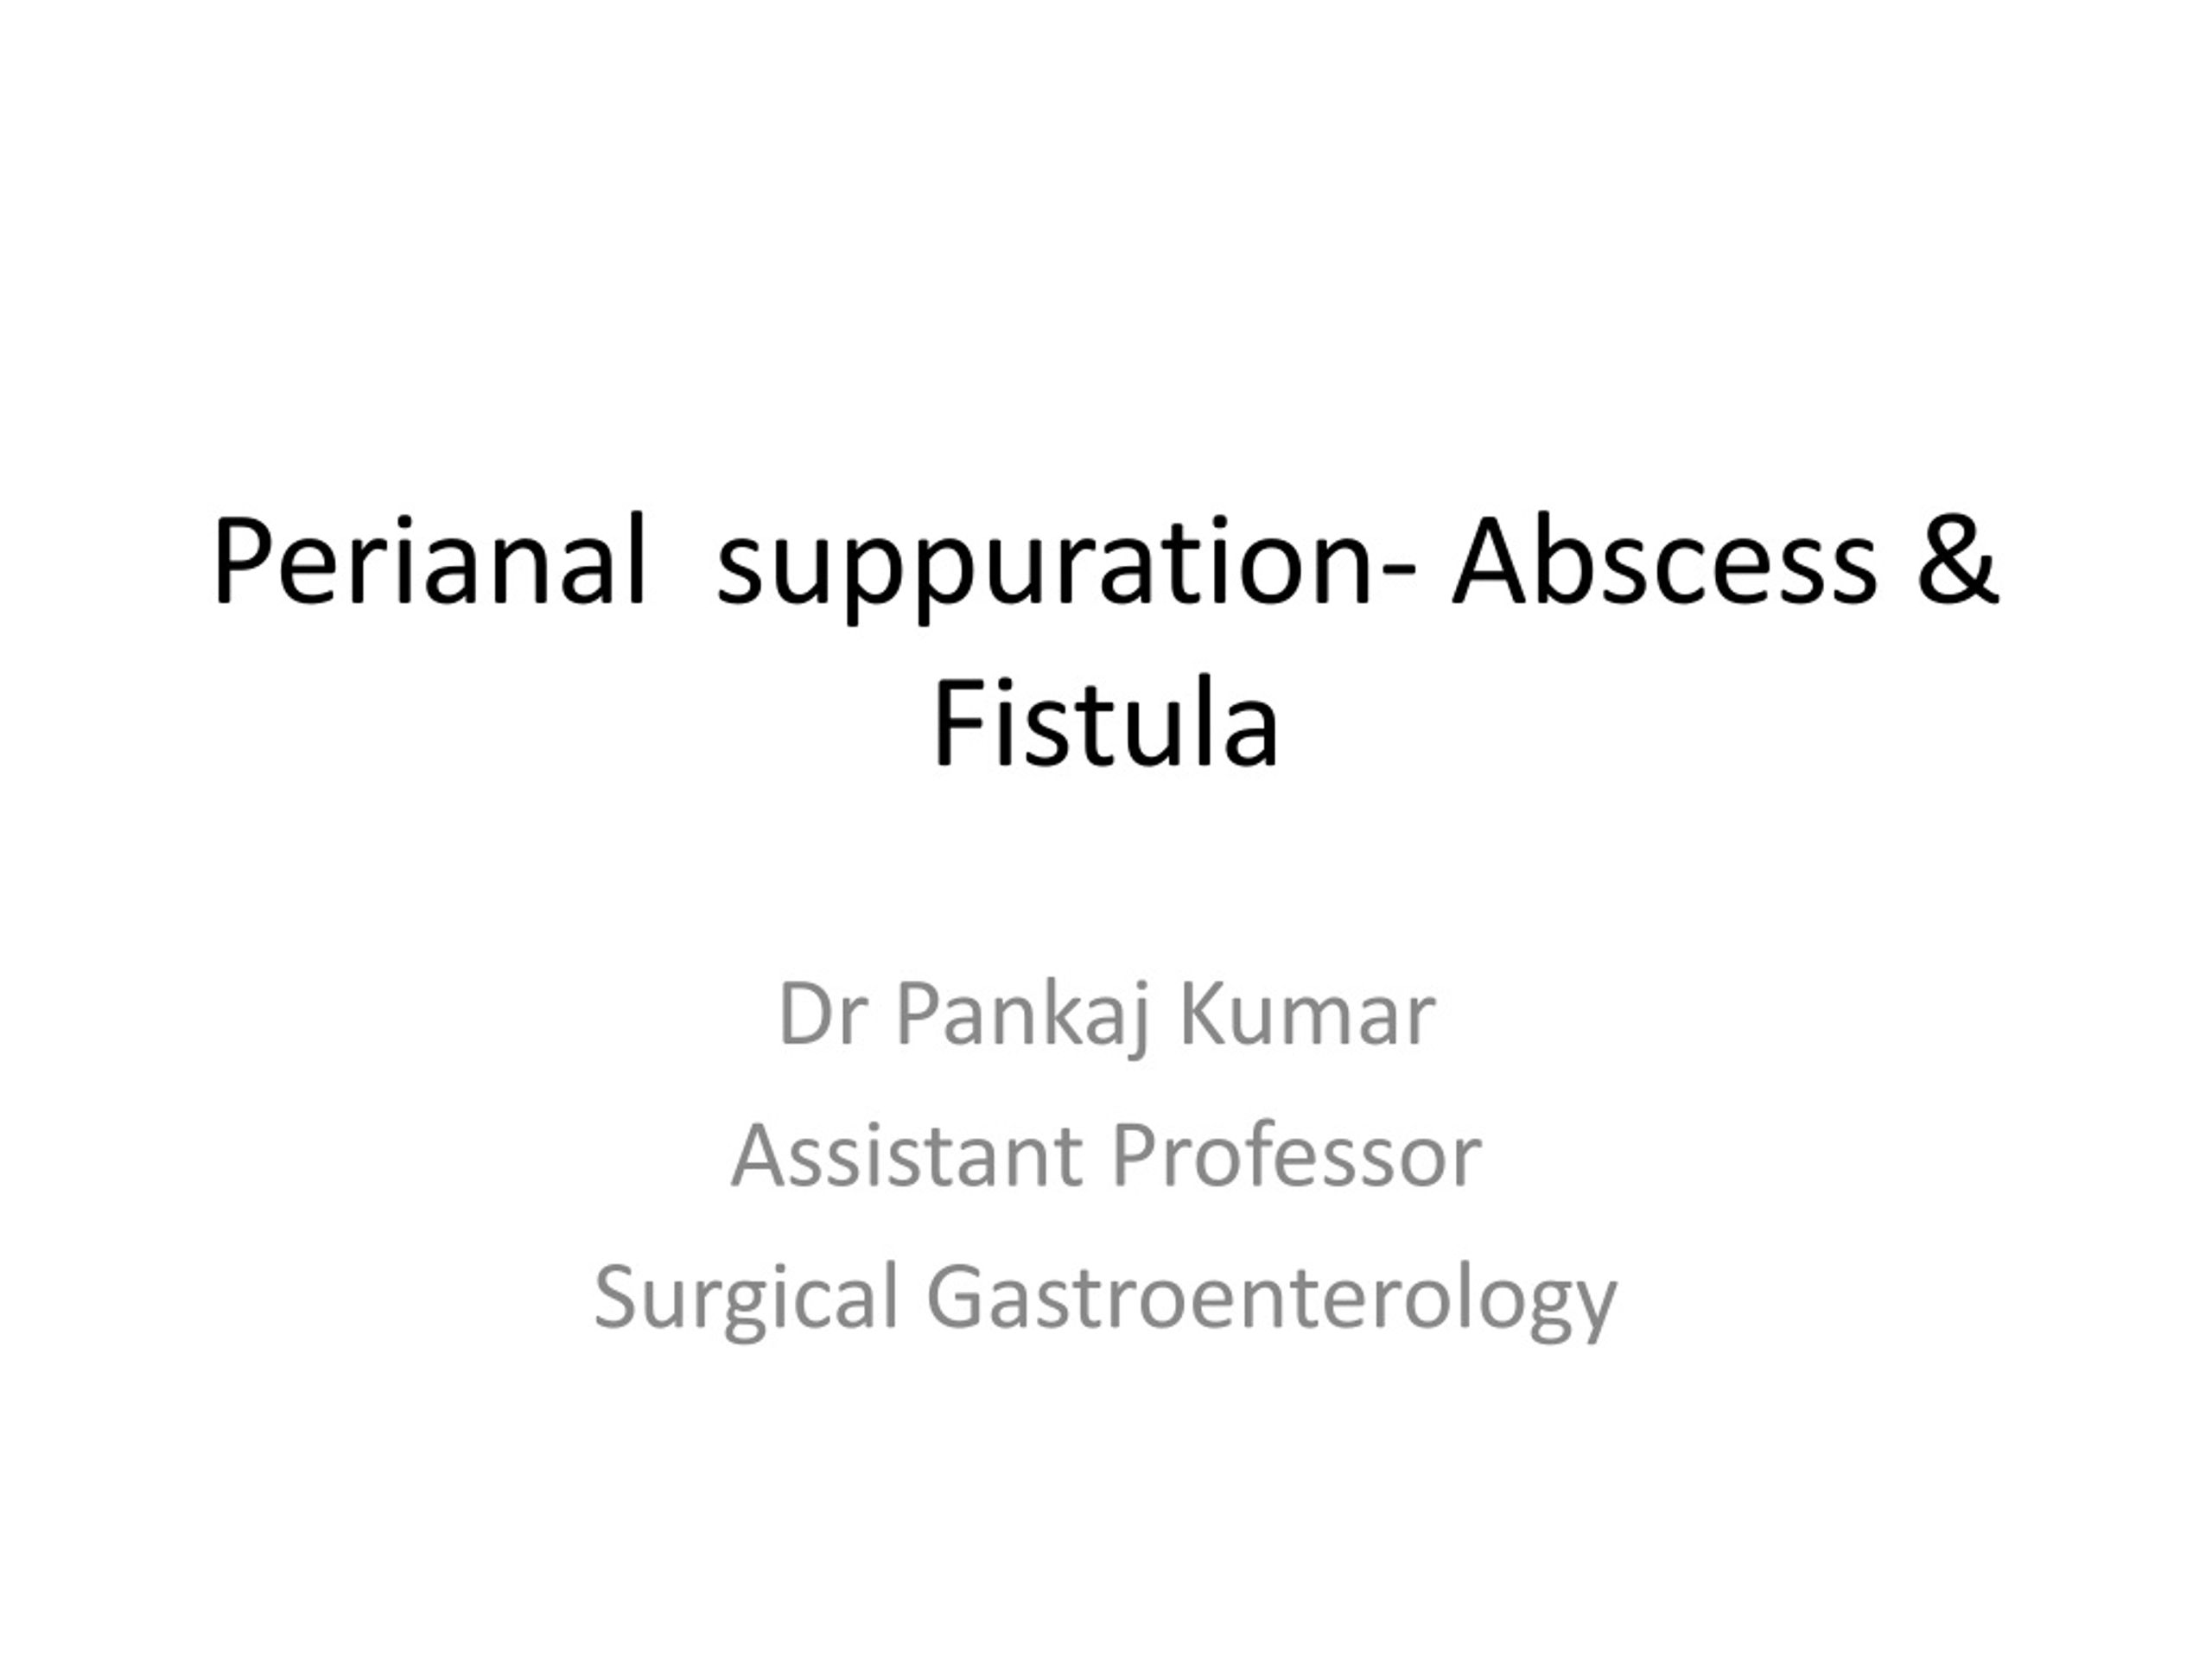 PPT Perianal Suppuration Abscess Fistula PowerPoint Presentation